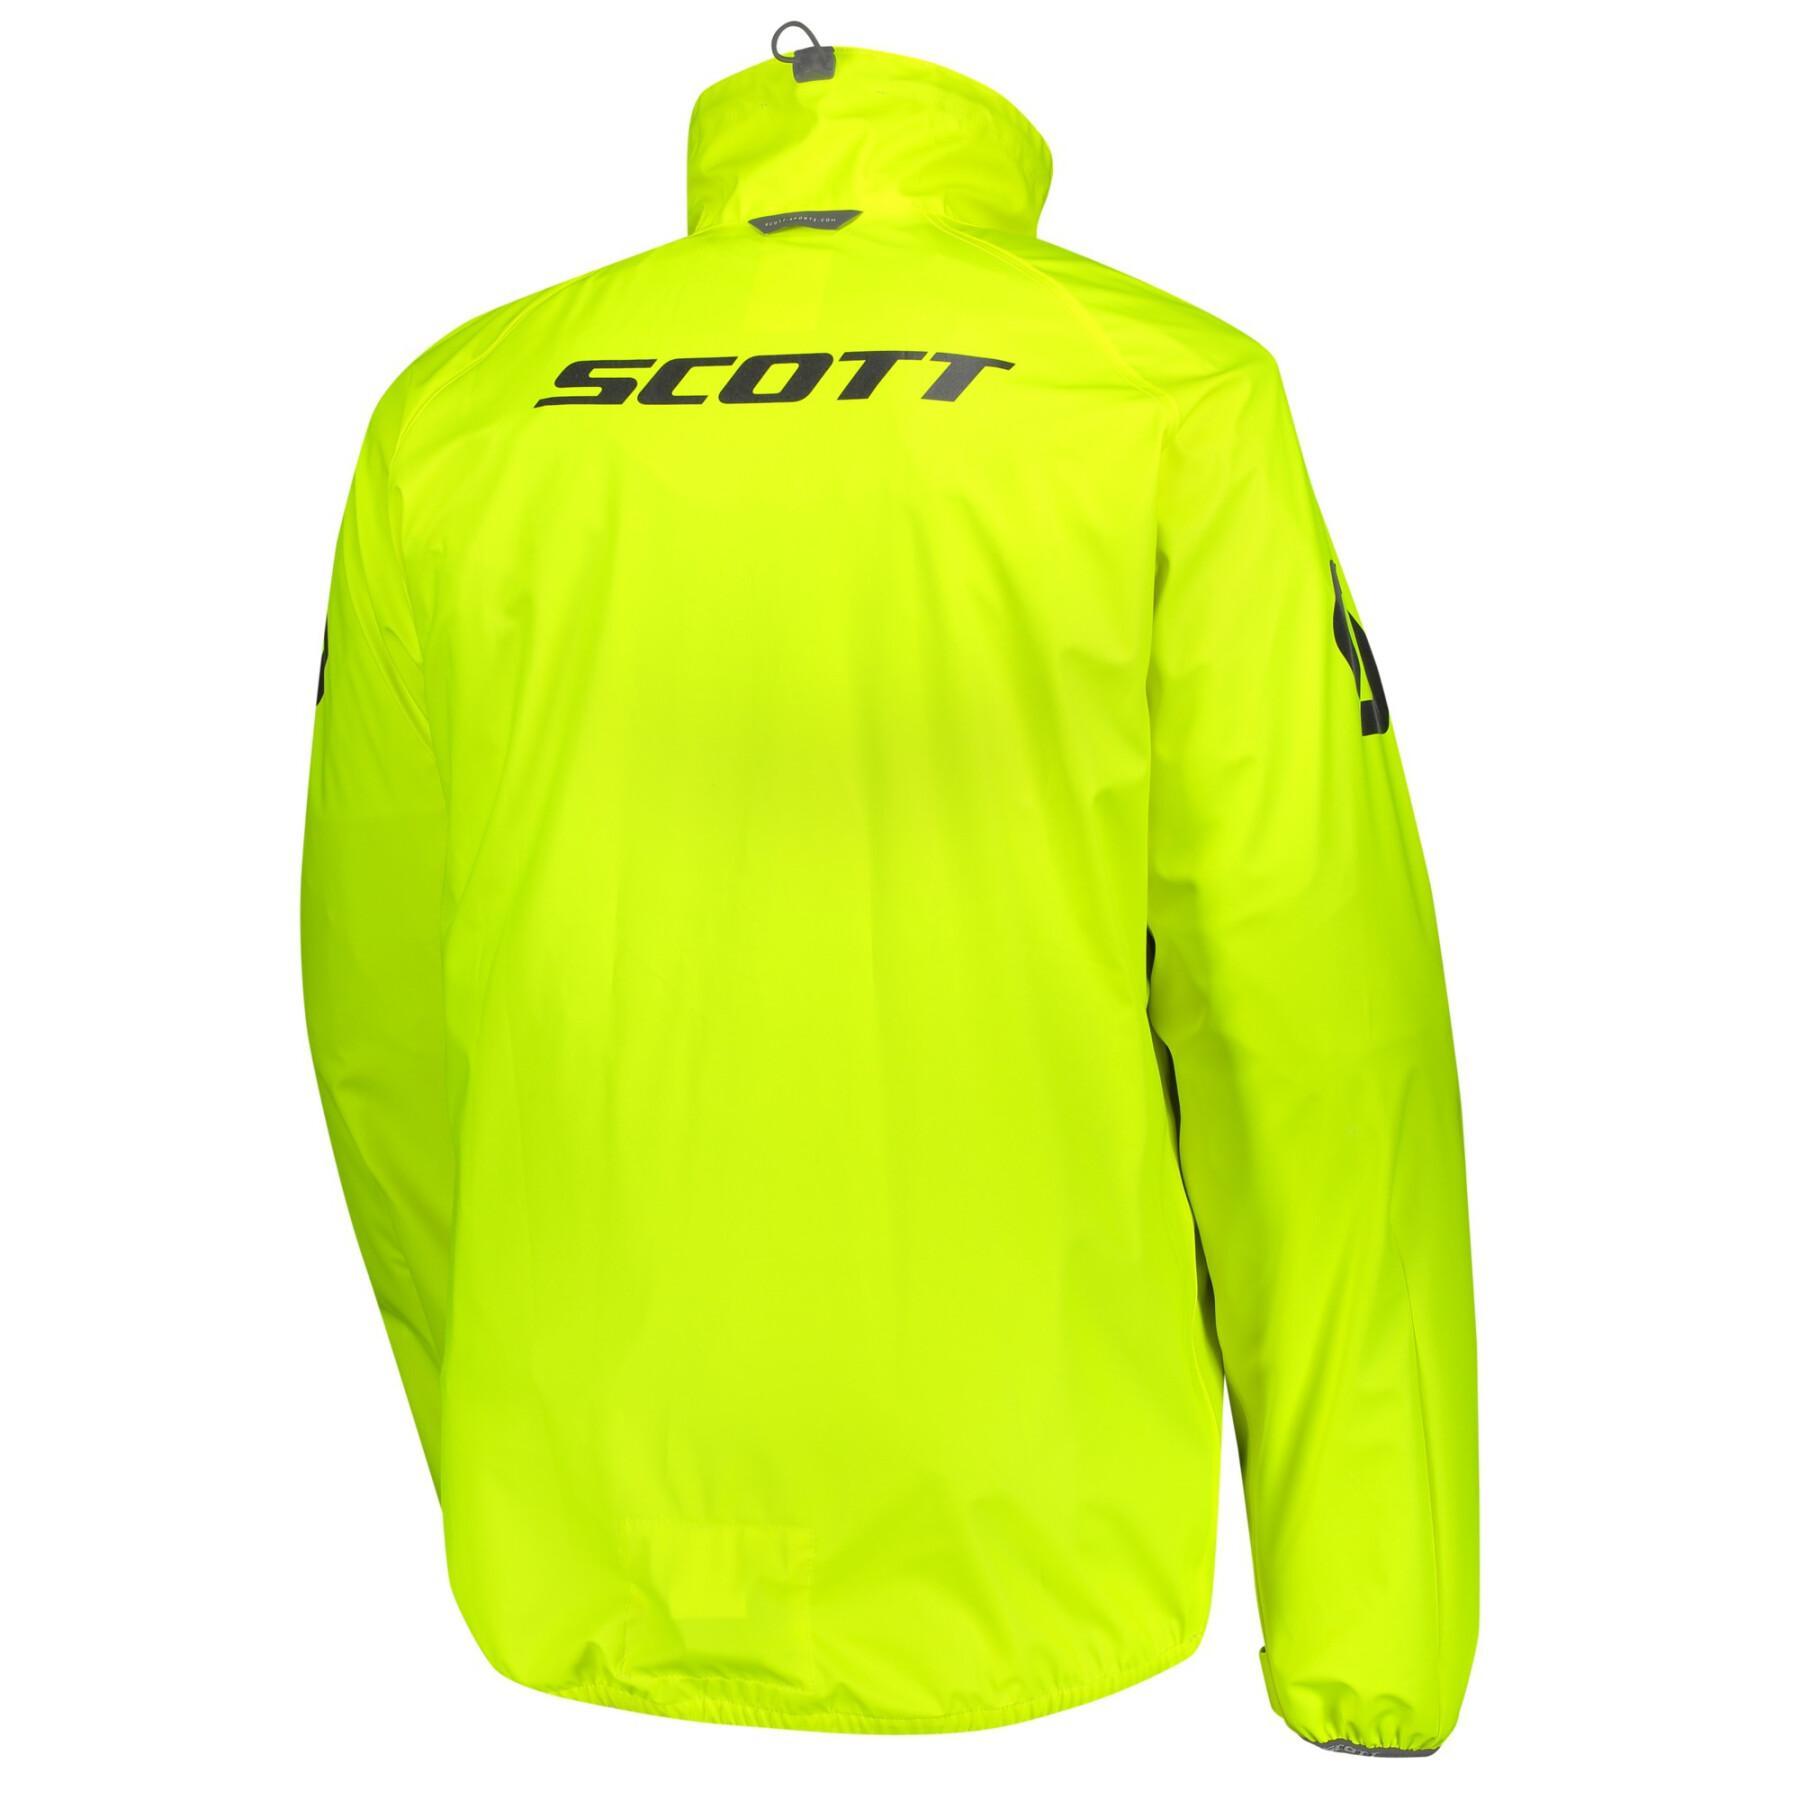 Rain jacket Scott ergonomic pro DP D-size